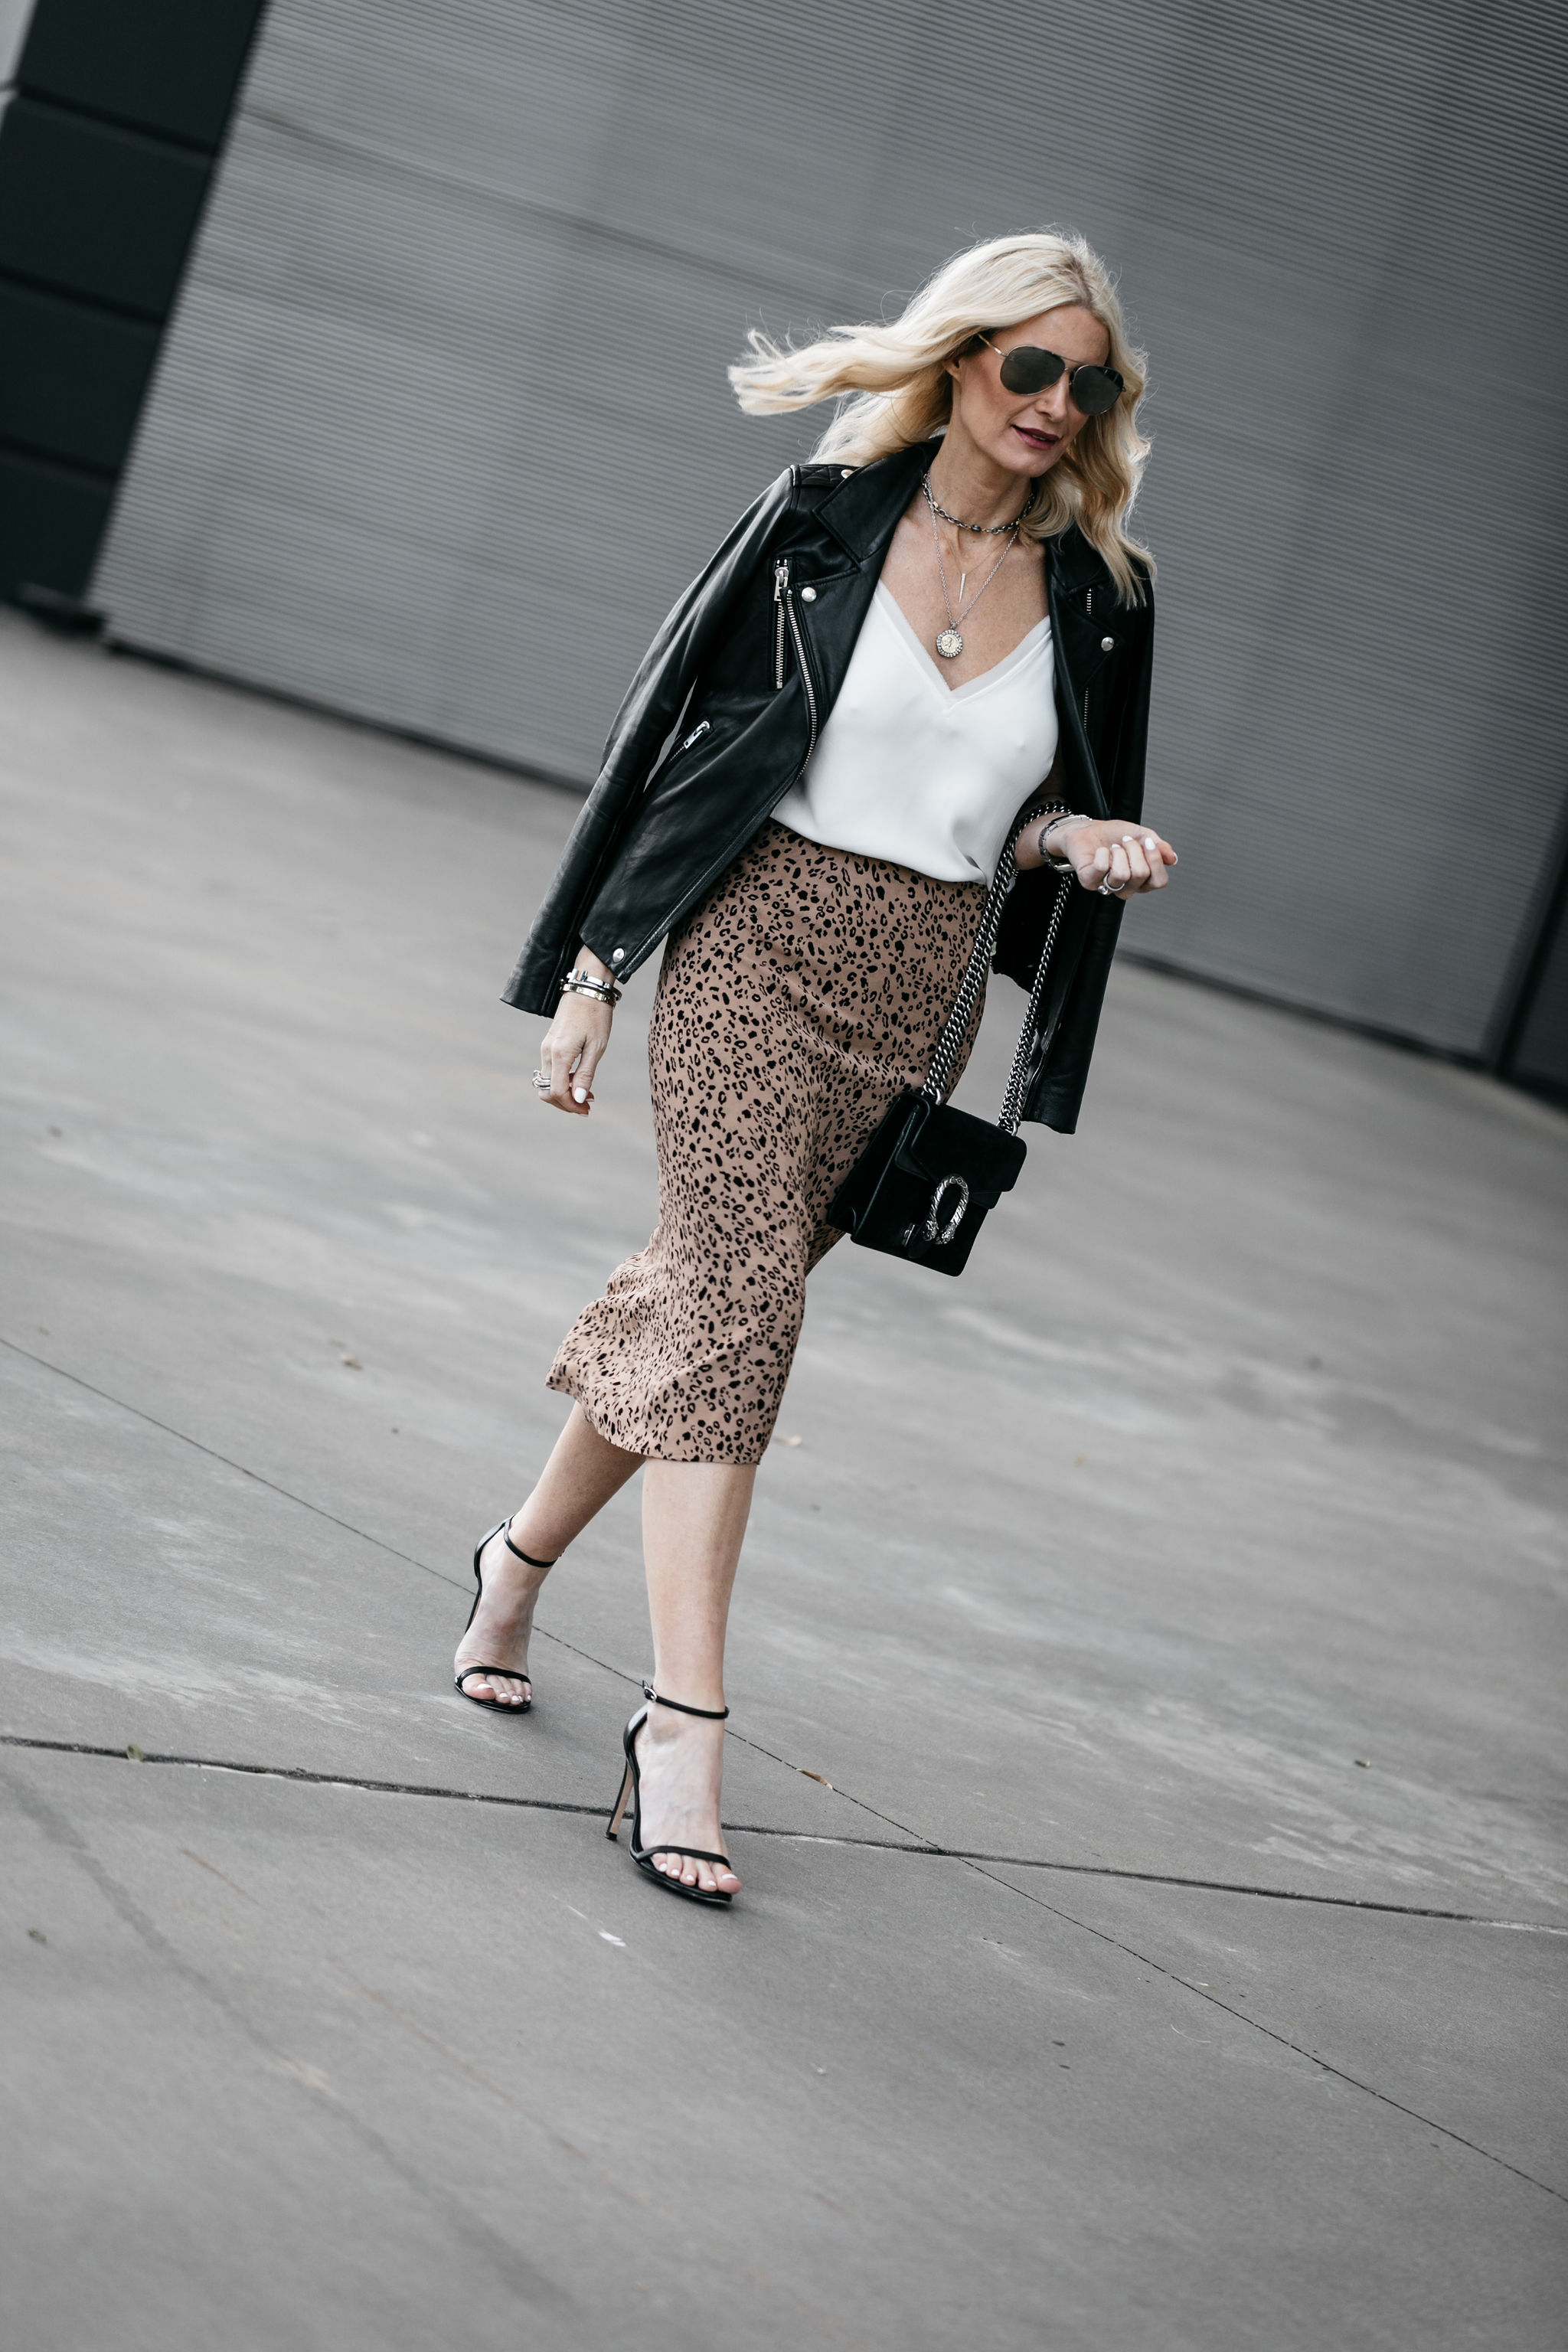 How to wear a leopard midi skirt | Reformation leopard midi skirt